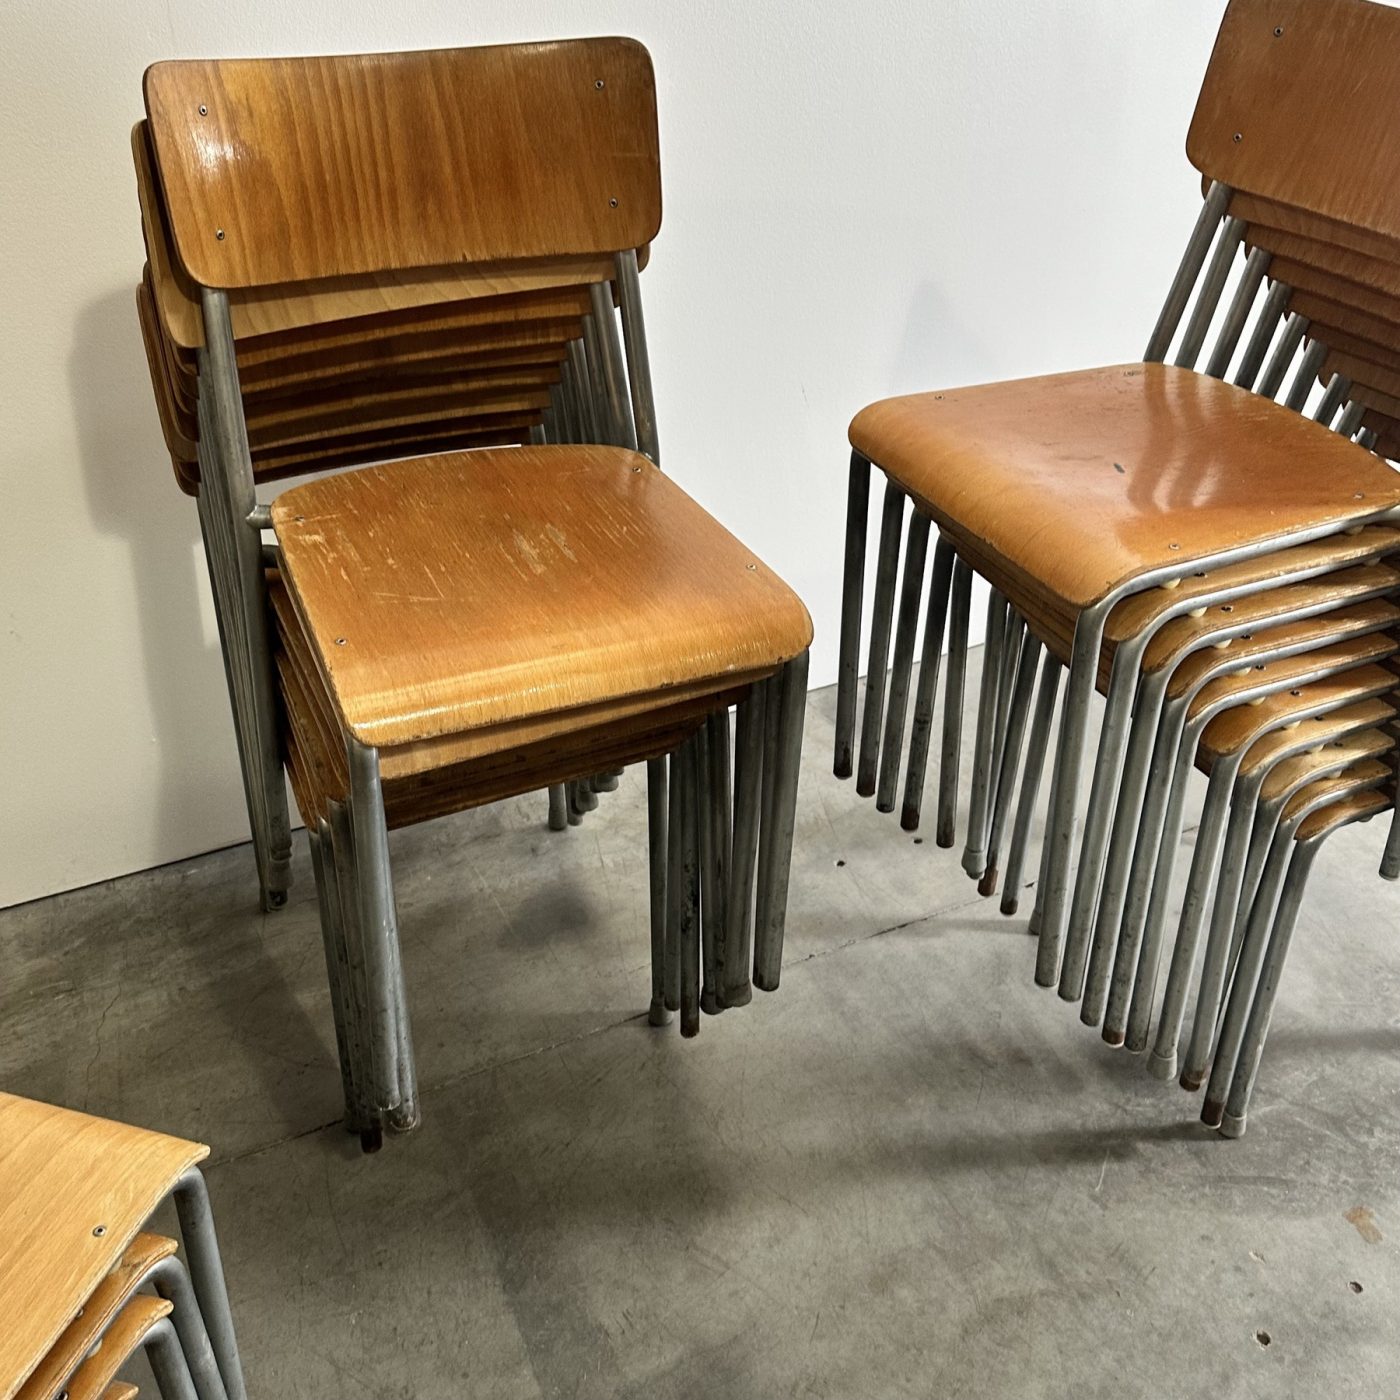 objet-vagabond-school-chairs0005